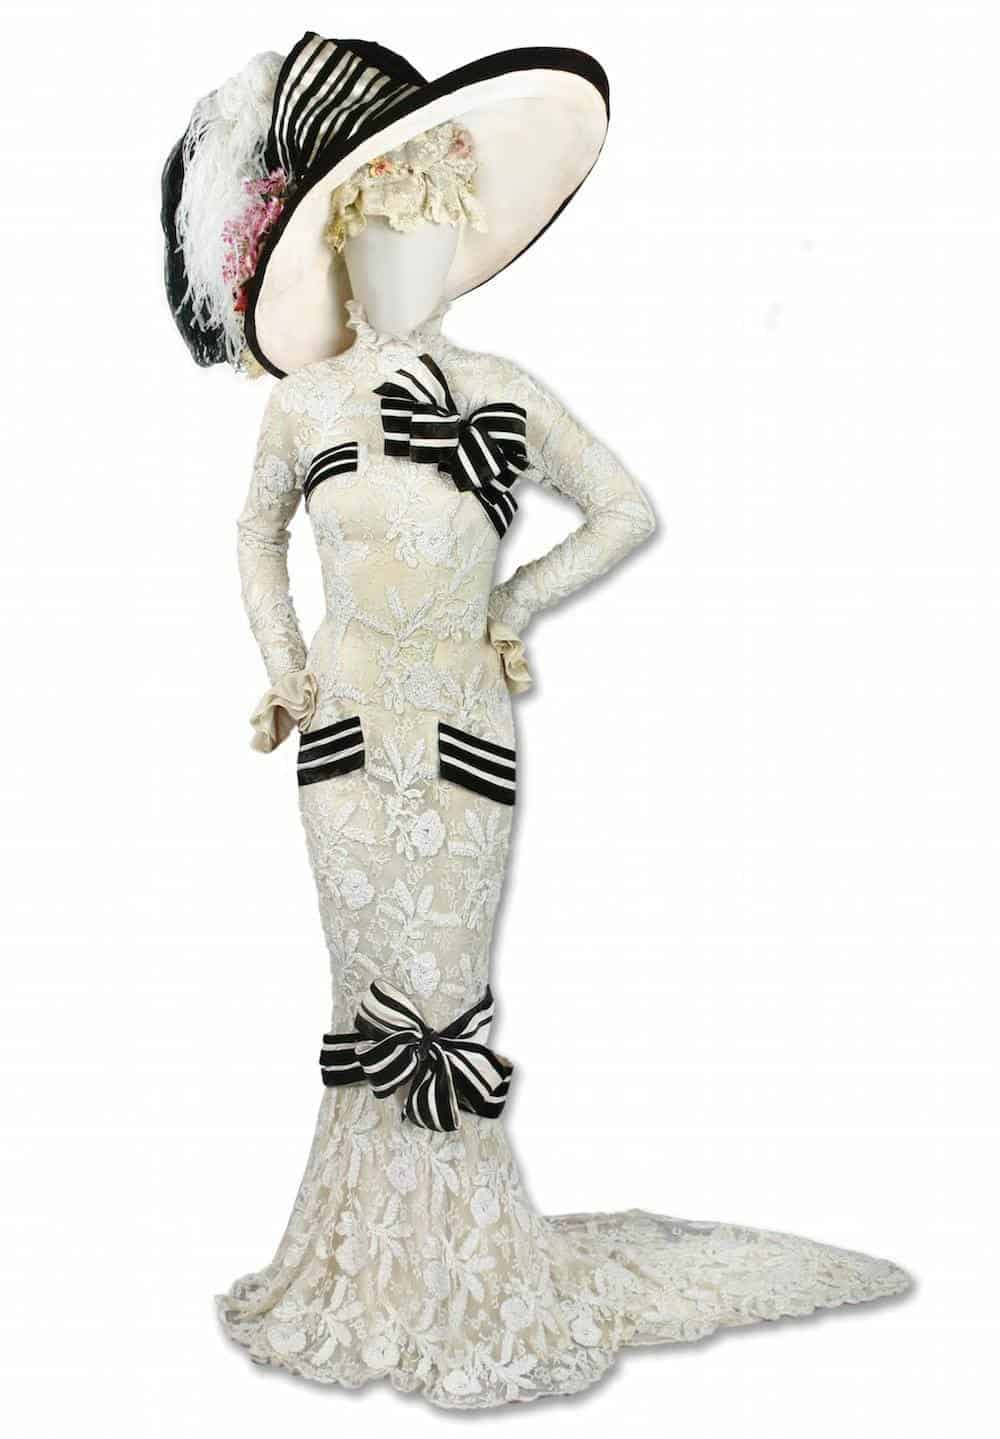 Audrey Hepburn’s Ascot dress from “My Fair Lady”